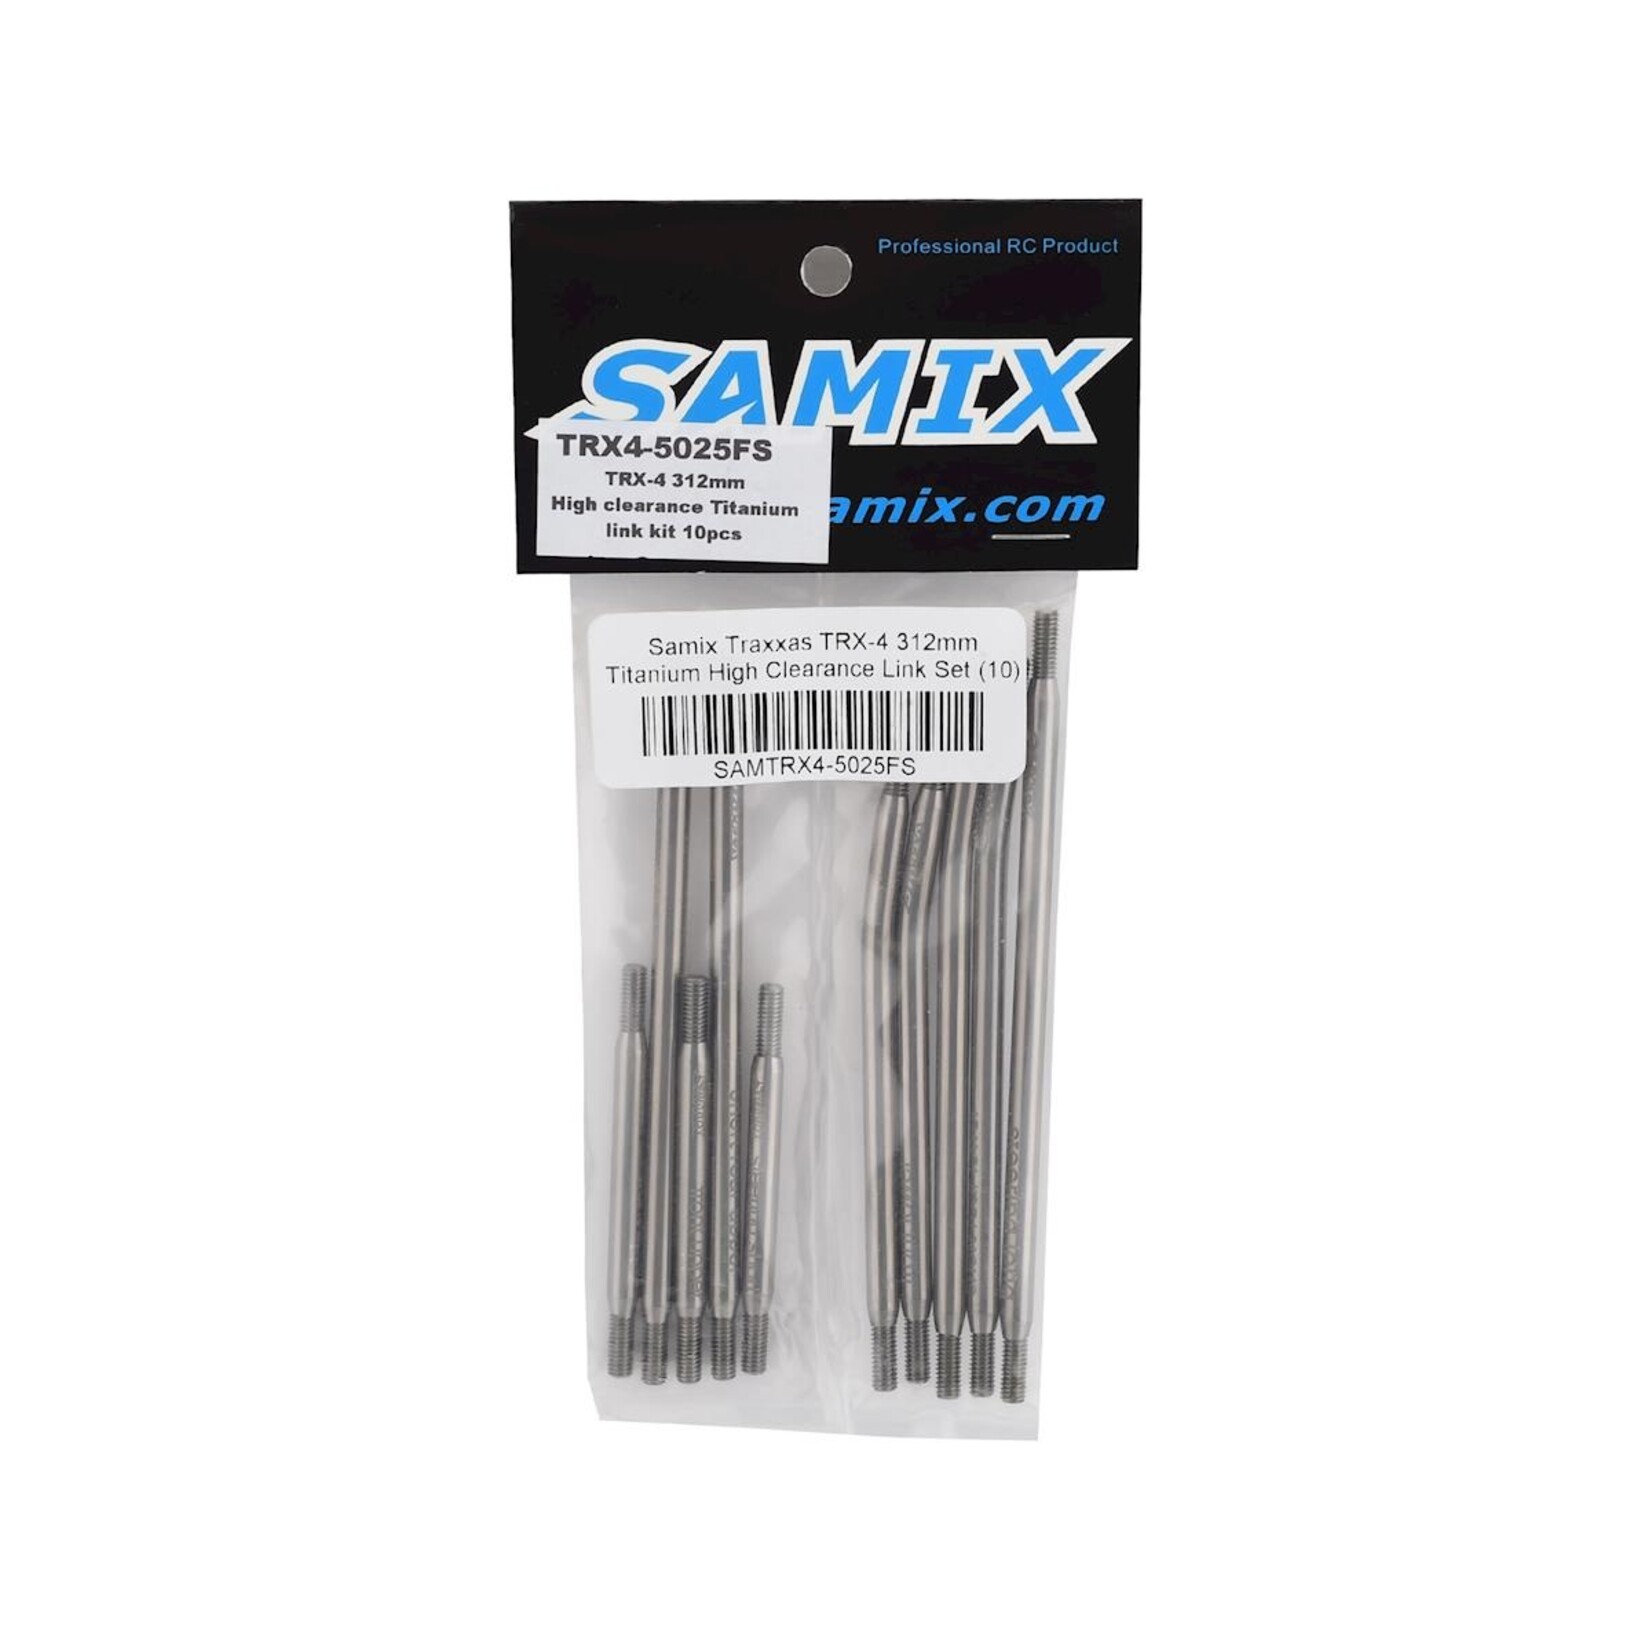 Samix Samix Traxxas TRX-4 312mm Titanium High Clearance Link Set (10) #TRX4-5025FS